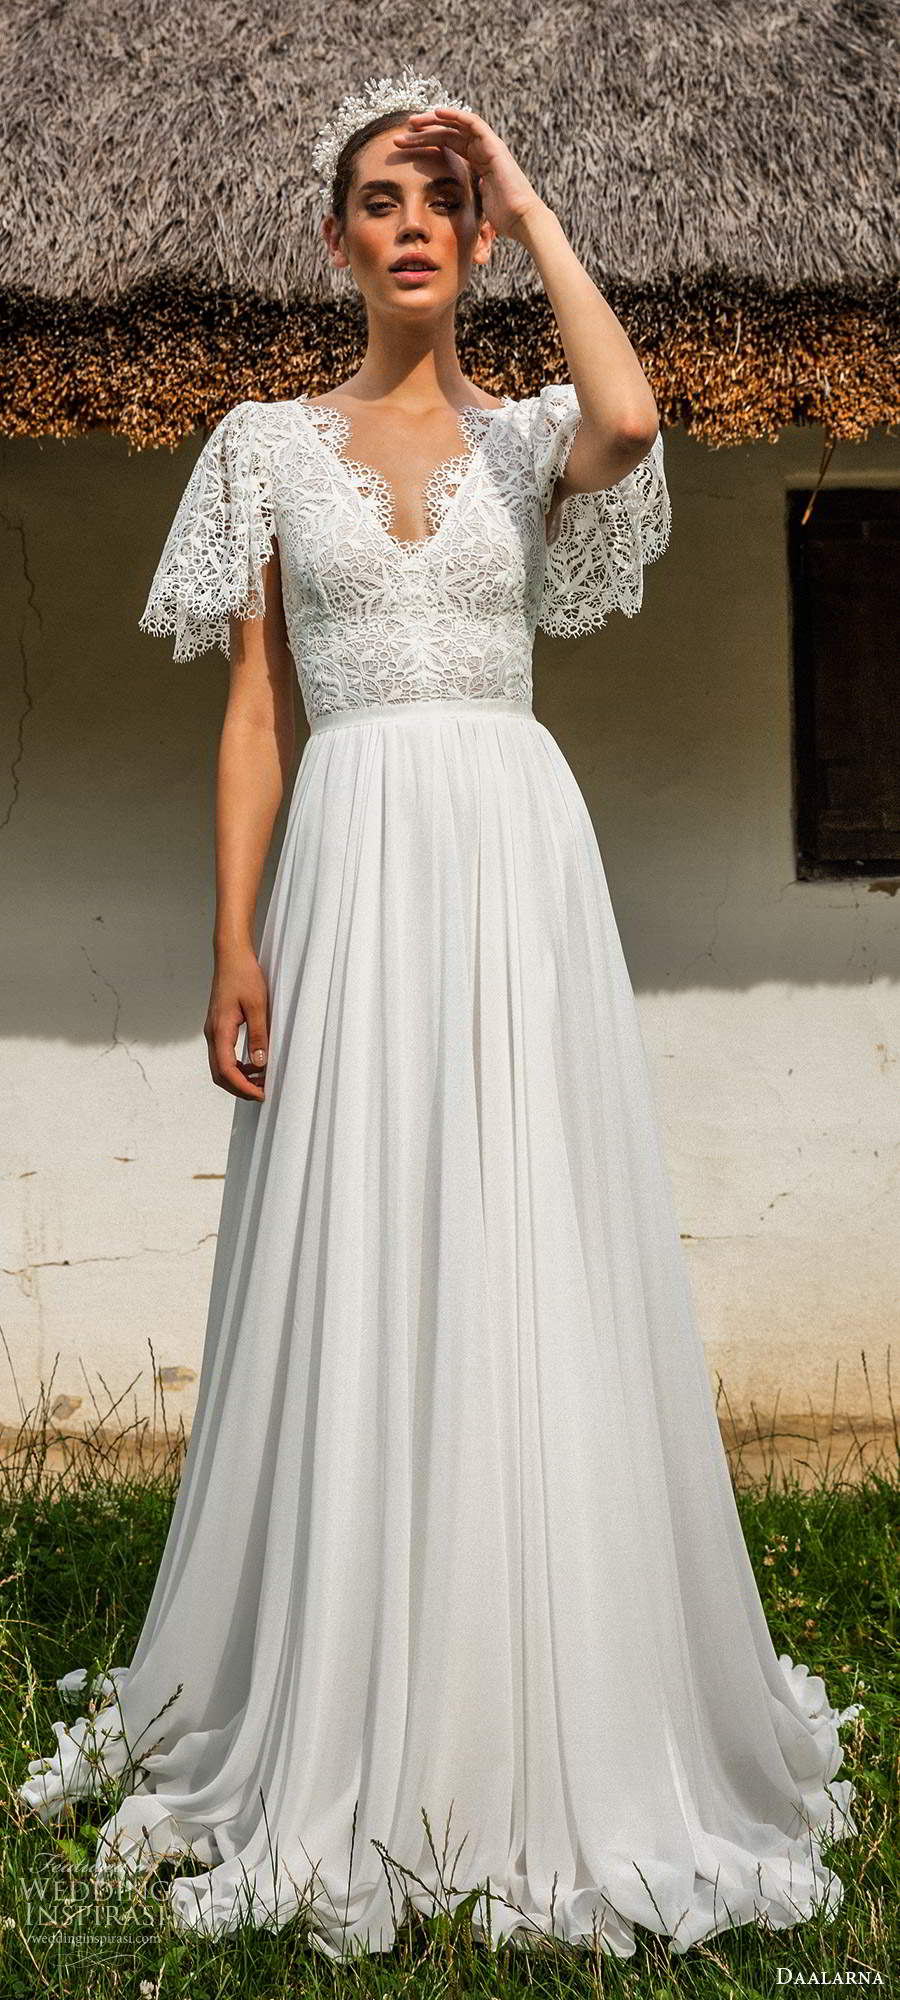 daalarna fall 2020 bridal flutter sleeves v neckline embellished lace bodice a line ball gown wedding dress chapel train (15) mv